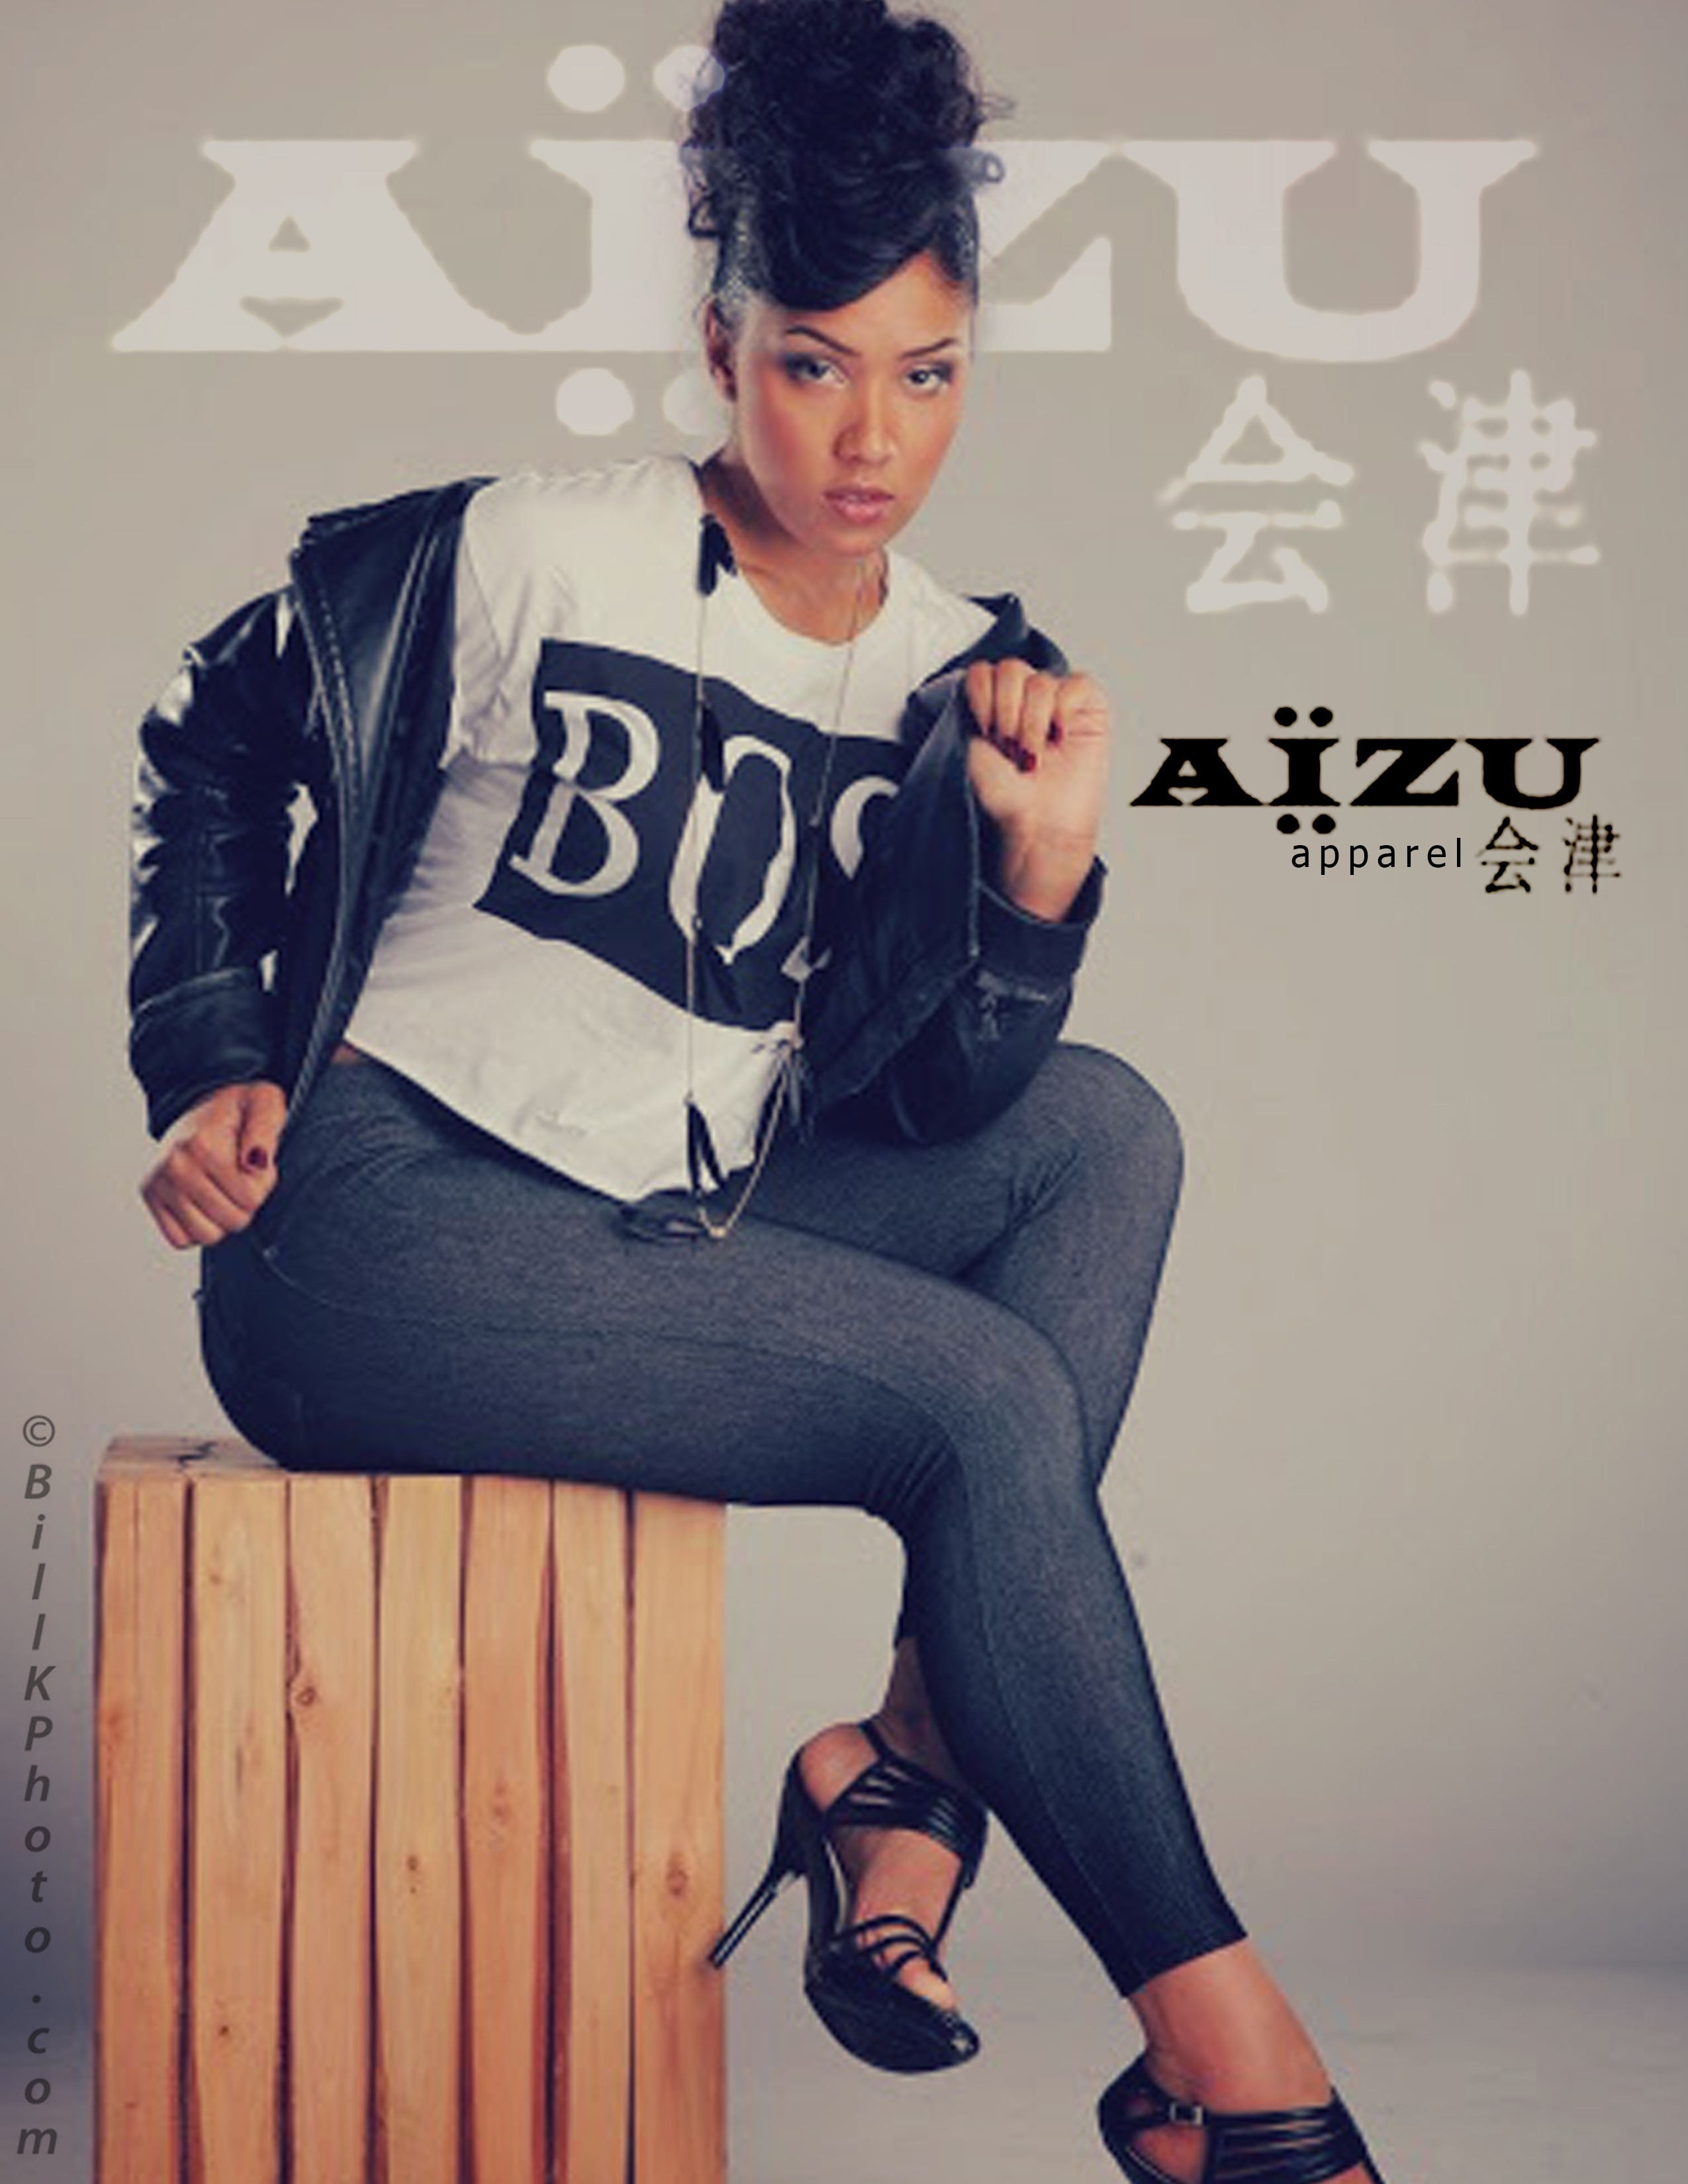 AIZU apparel fall 2013 - Advertising Campaign